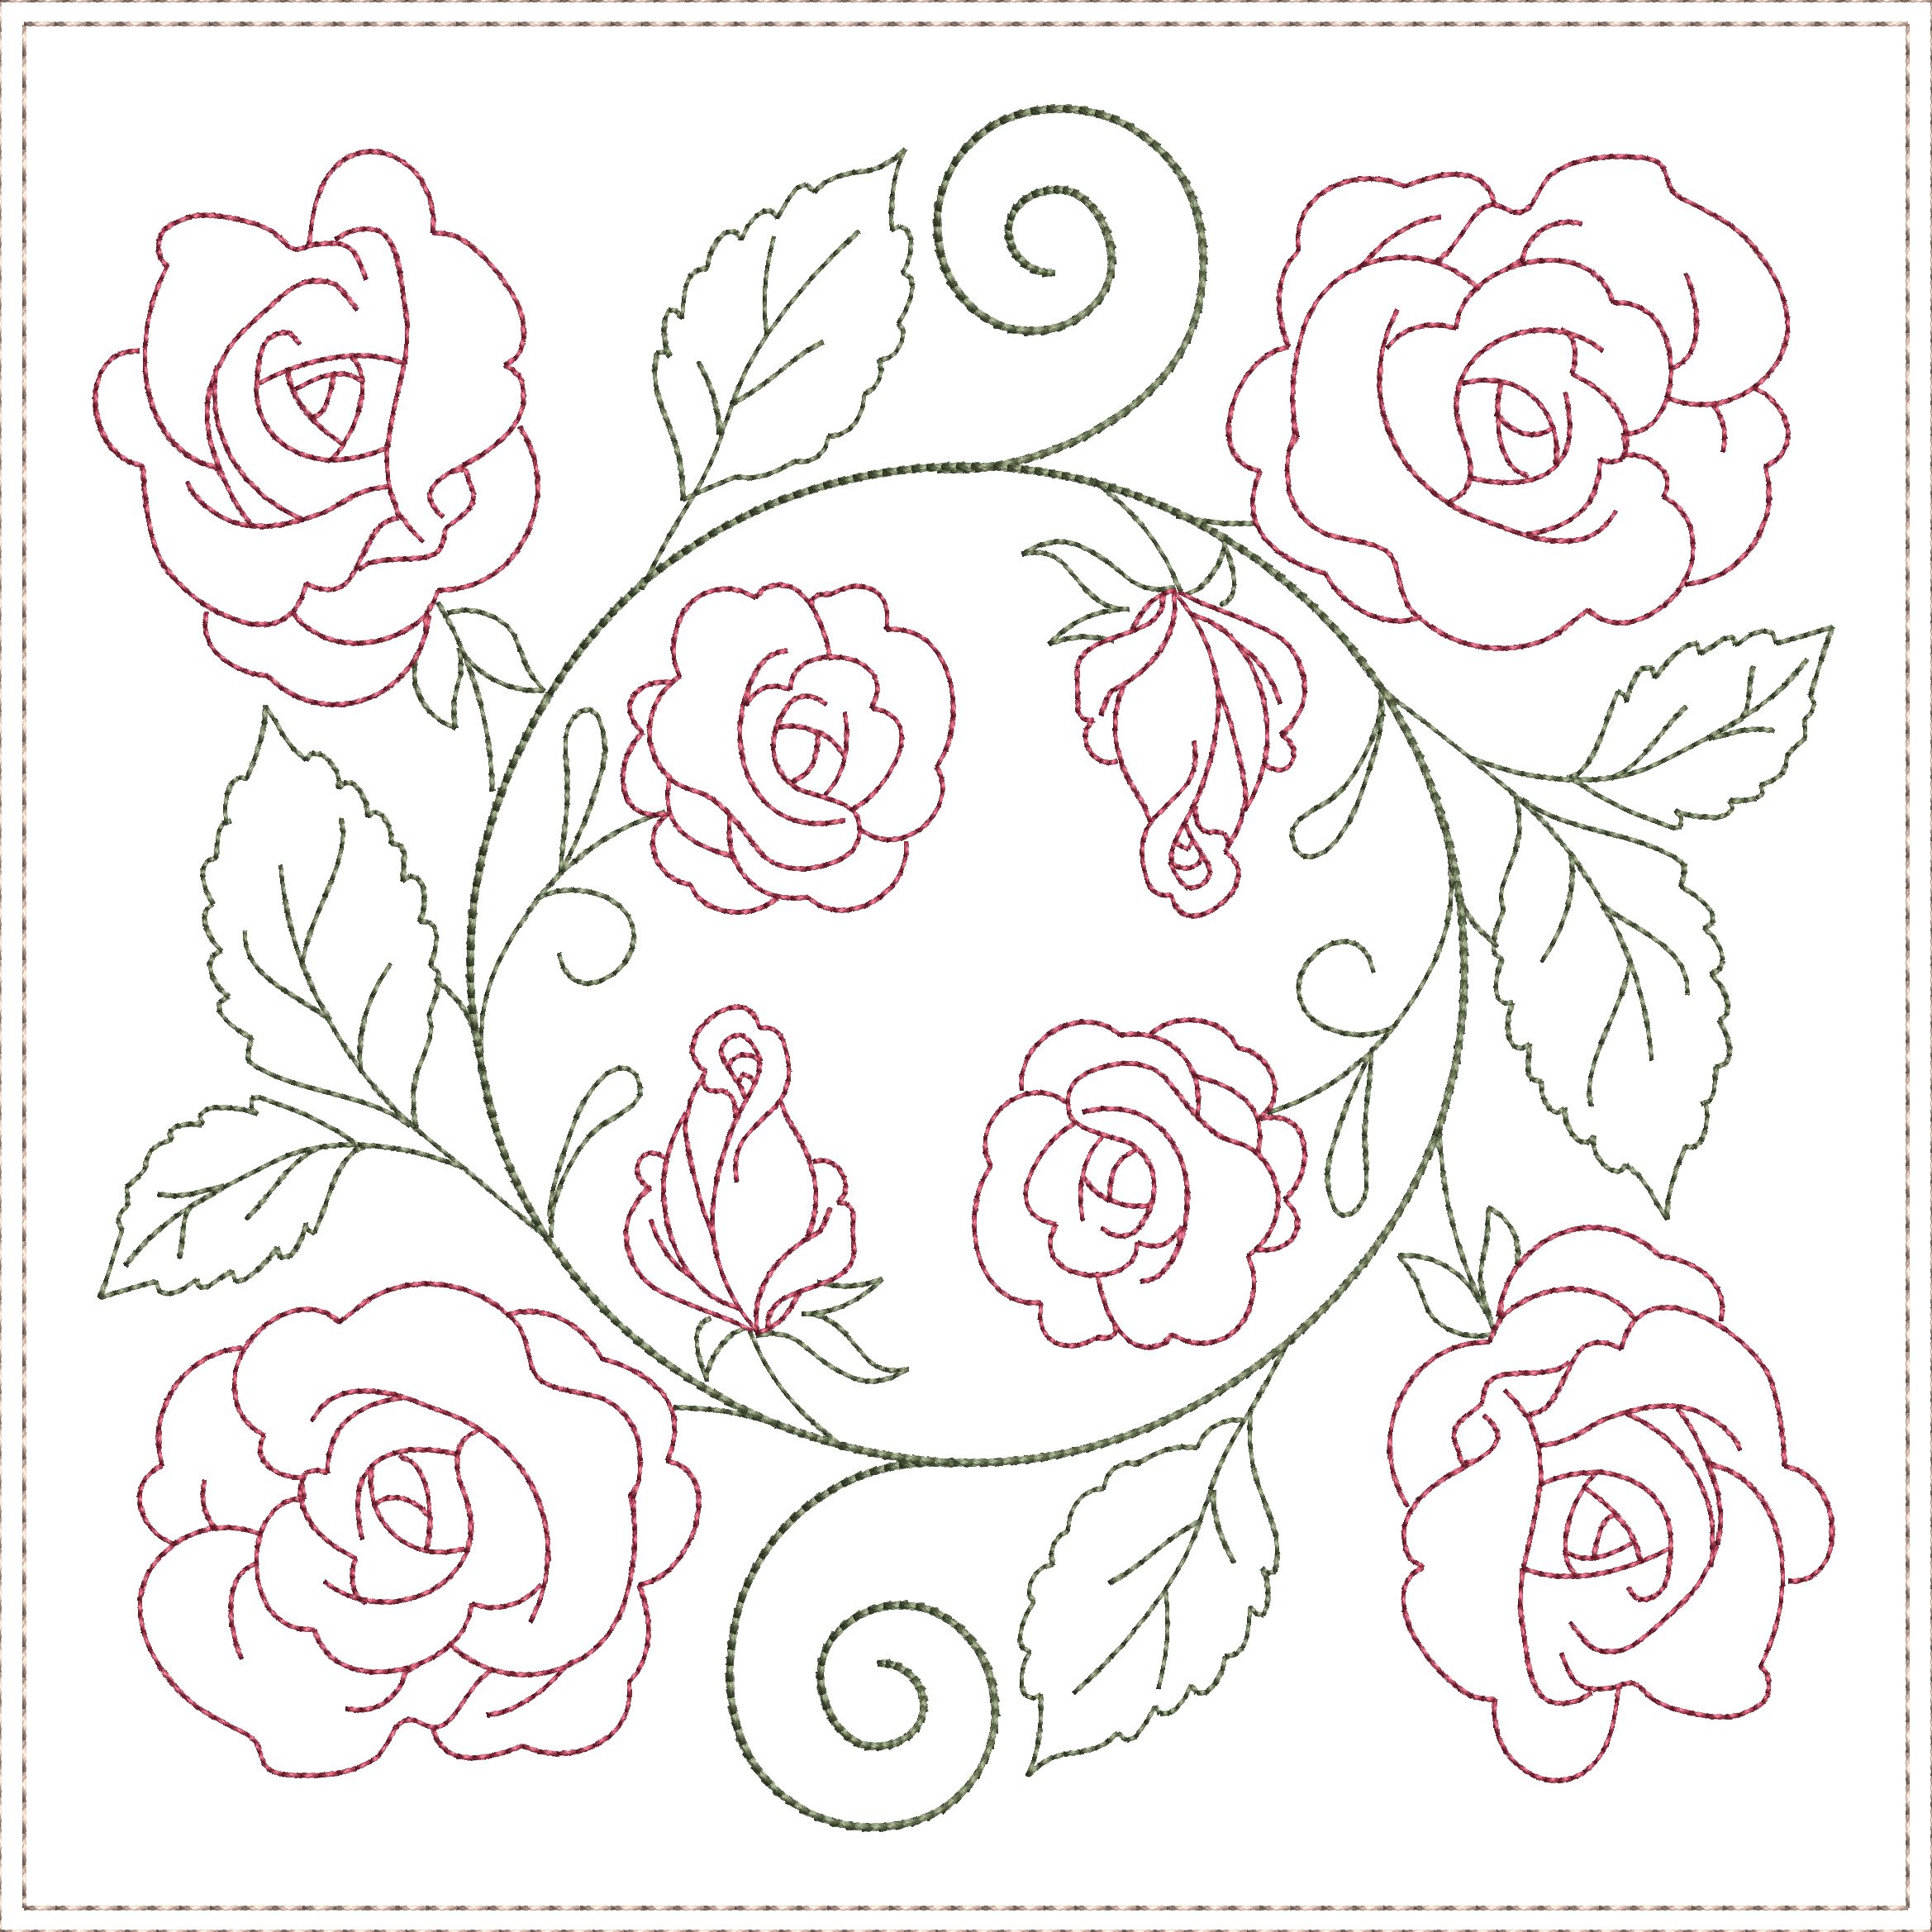 Circle of Roses-18